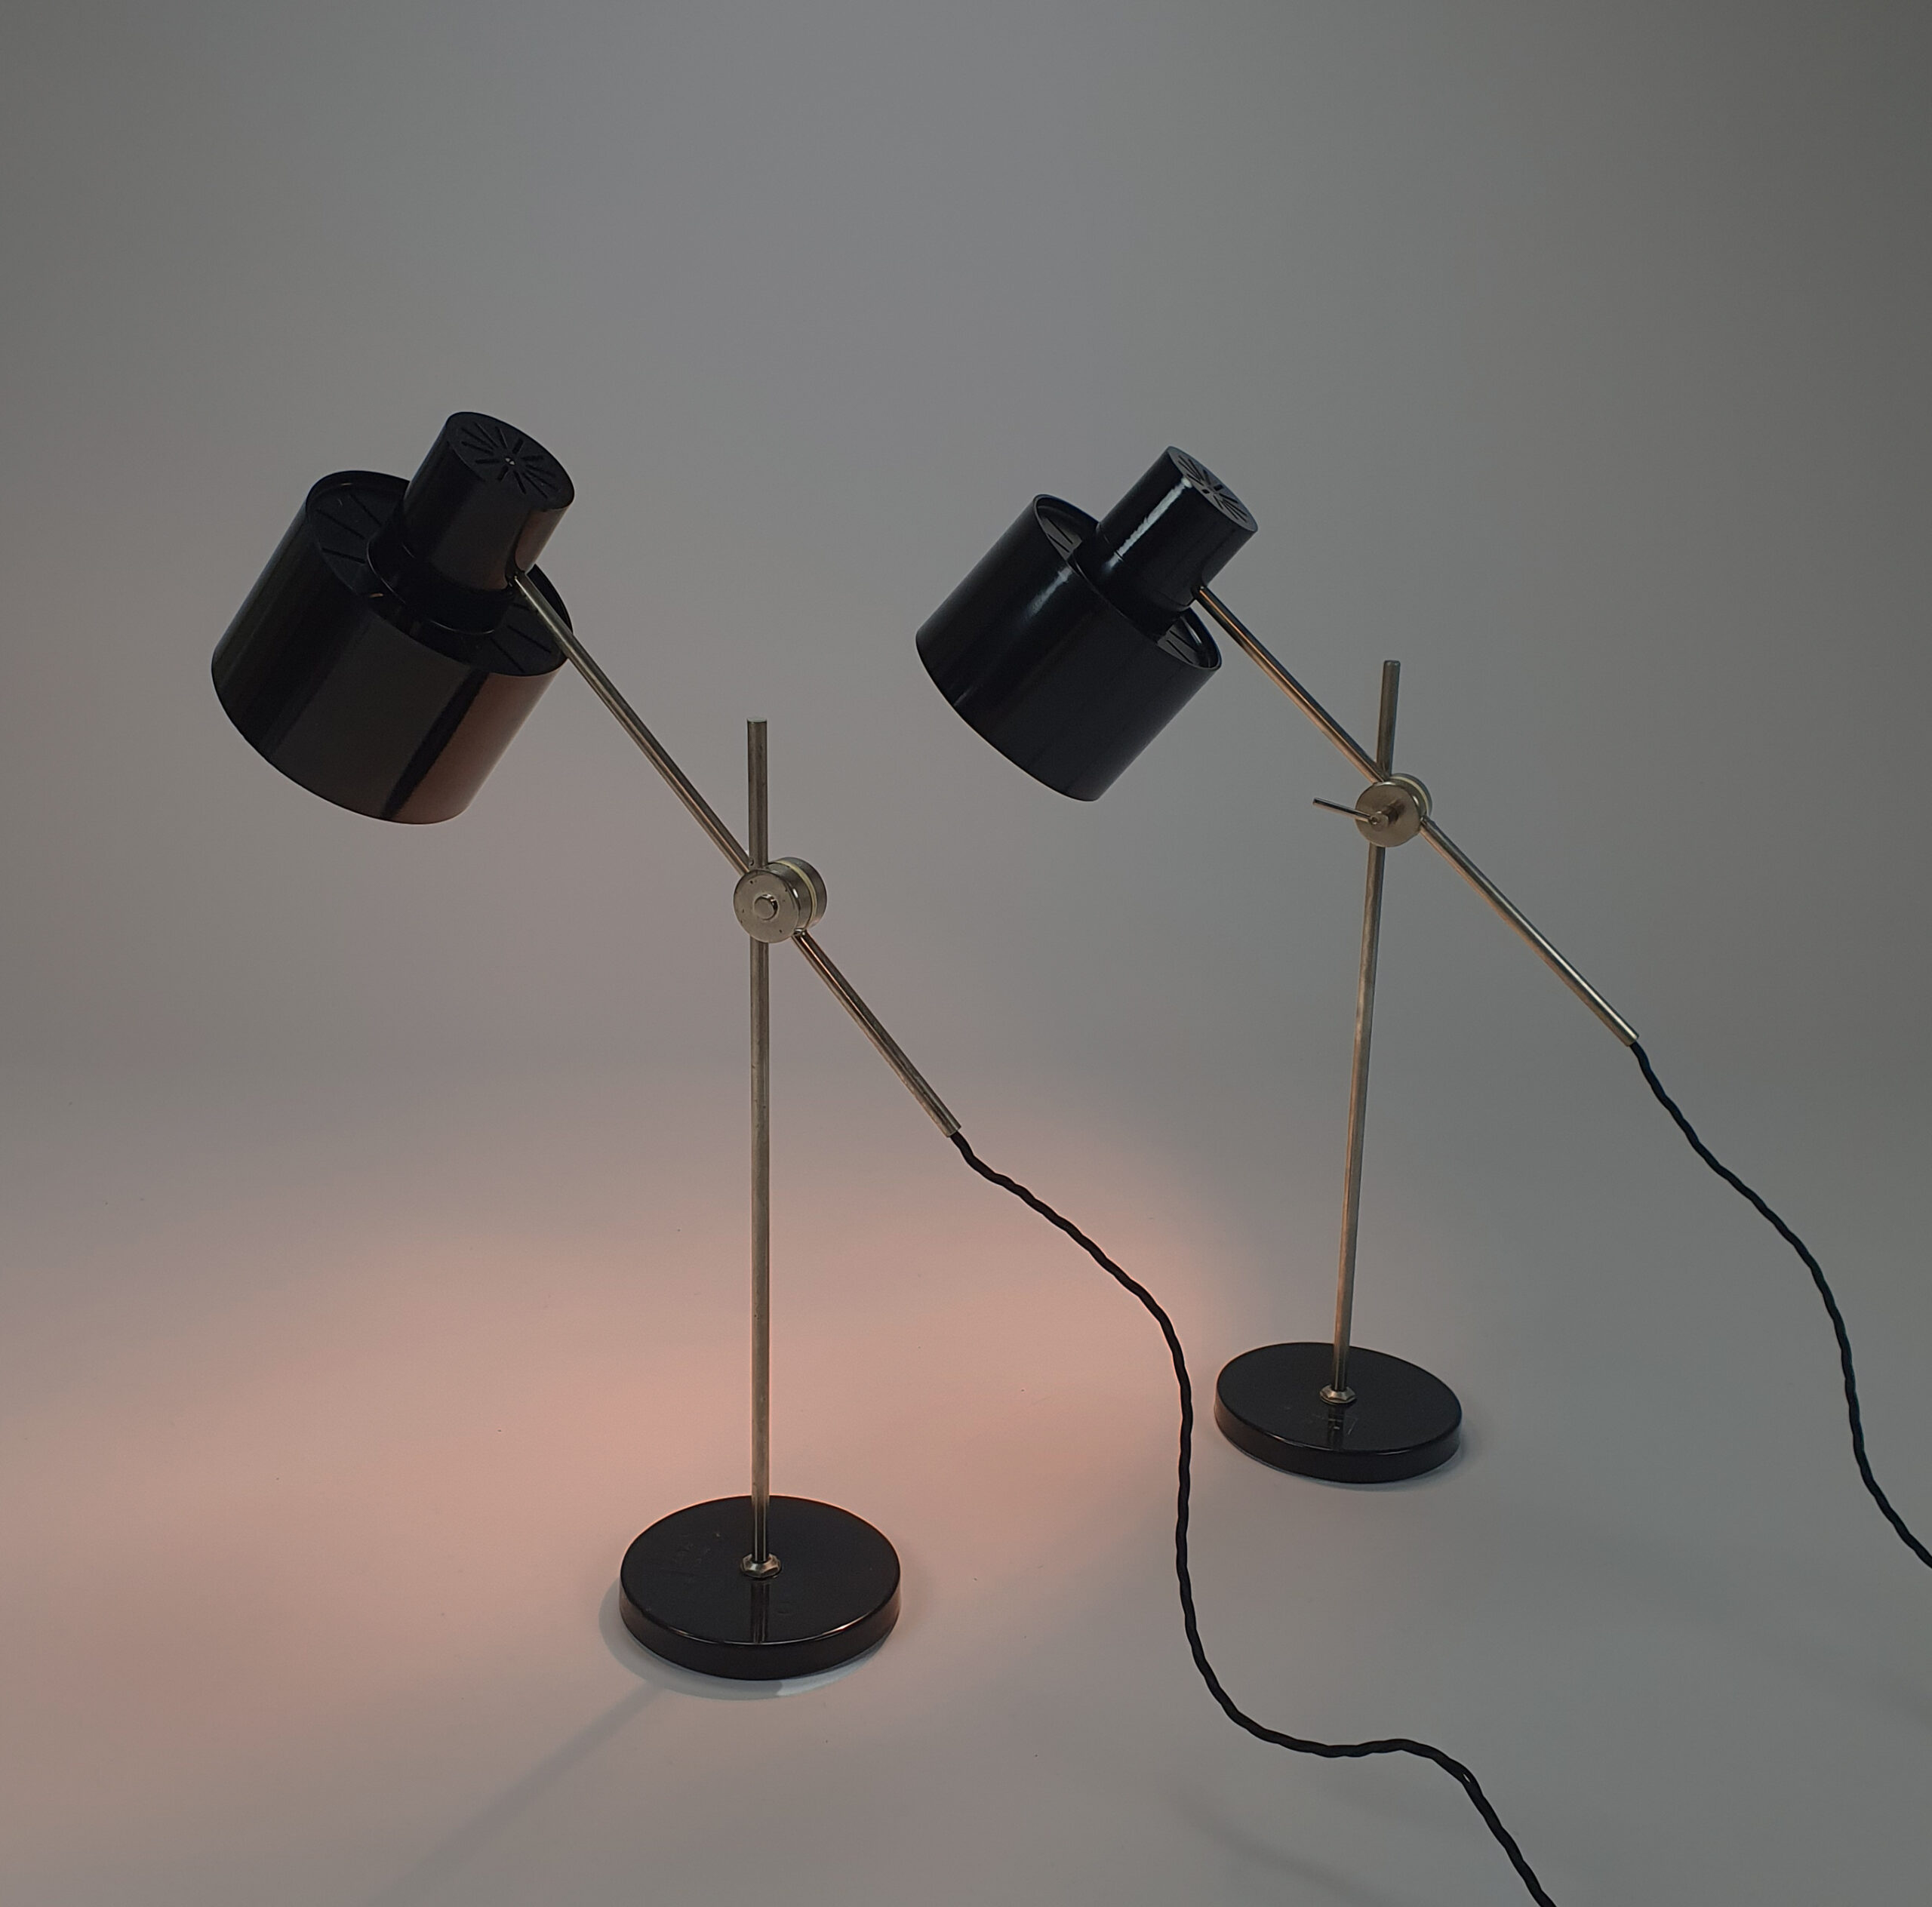 Set of Bakelite Lamps "Komisarka" by Ján Šucháň (Jan Suchan)